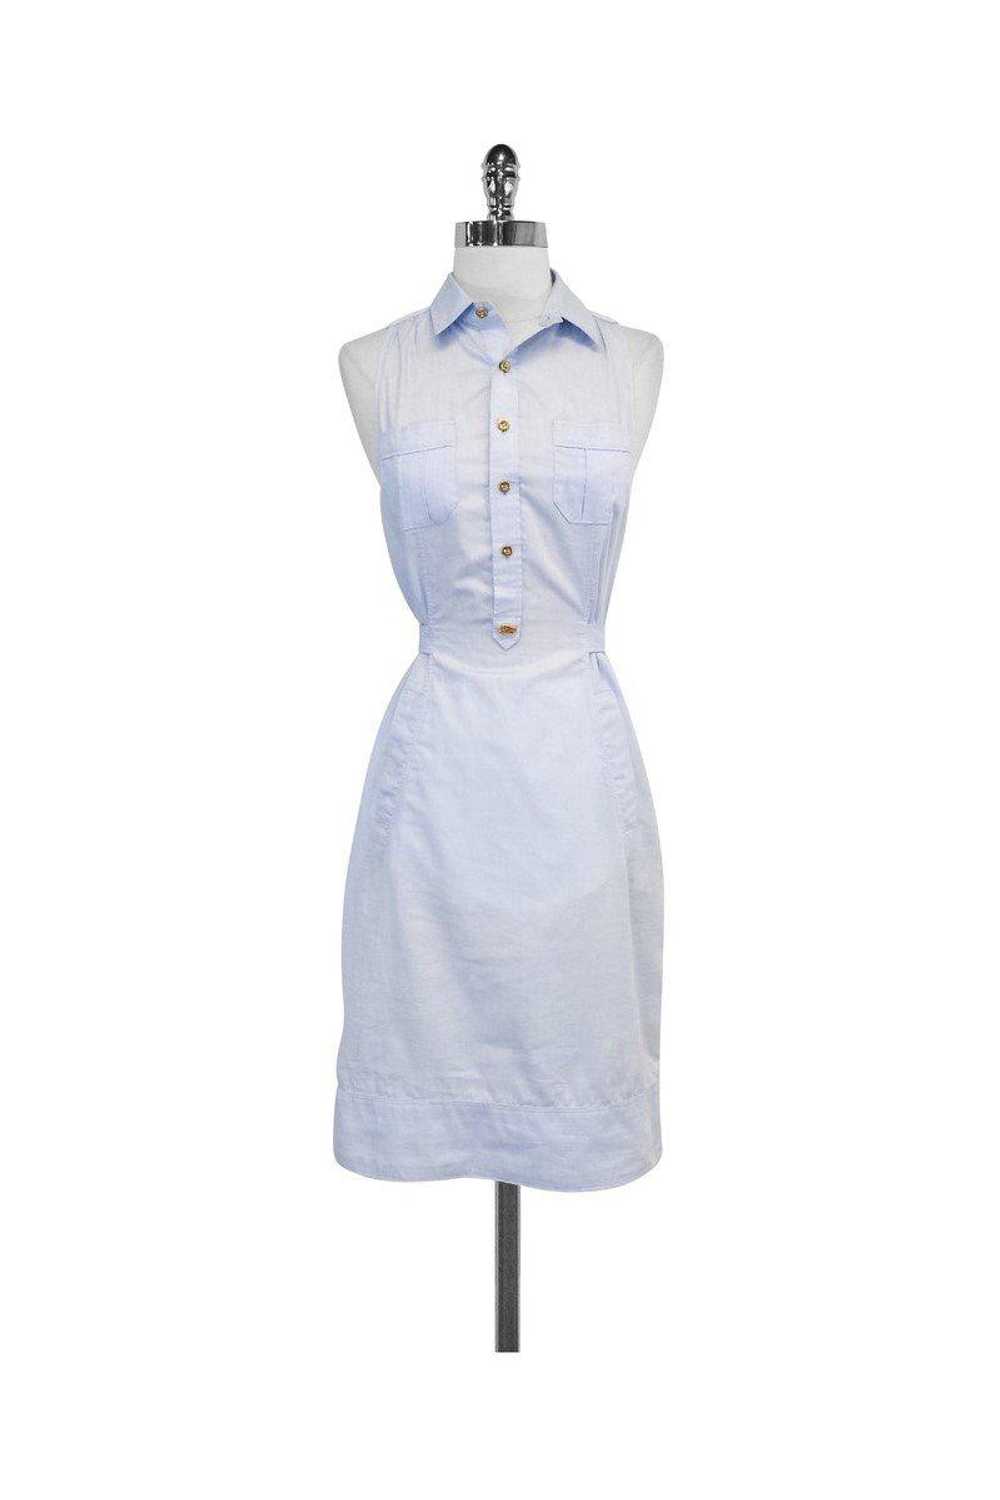 DSQUARED2 - Light Blue Cotton Sleeveless Shirtdre… - image 1